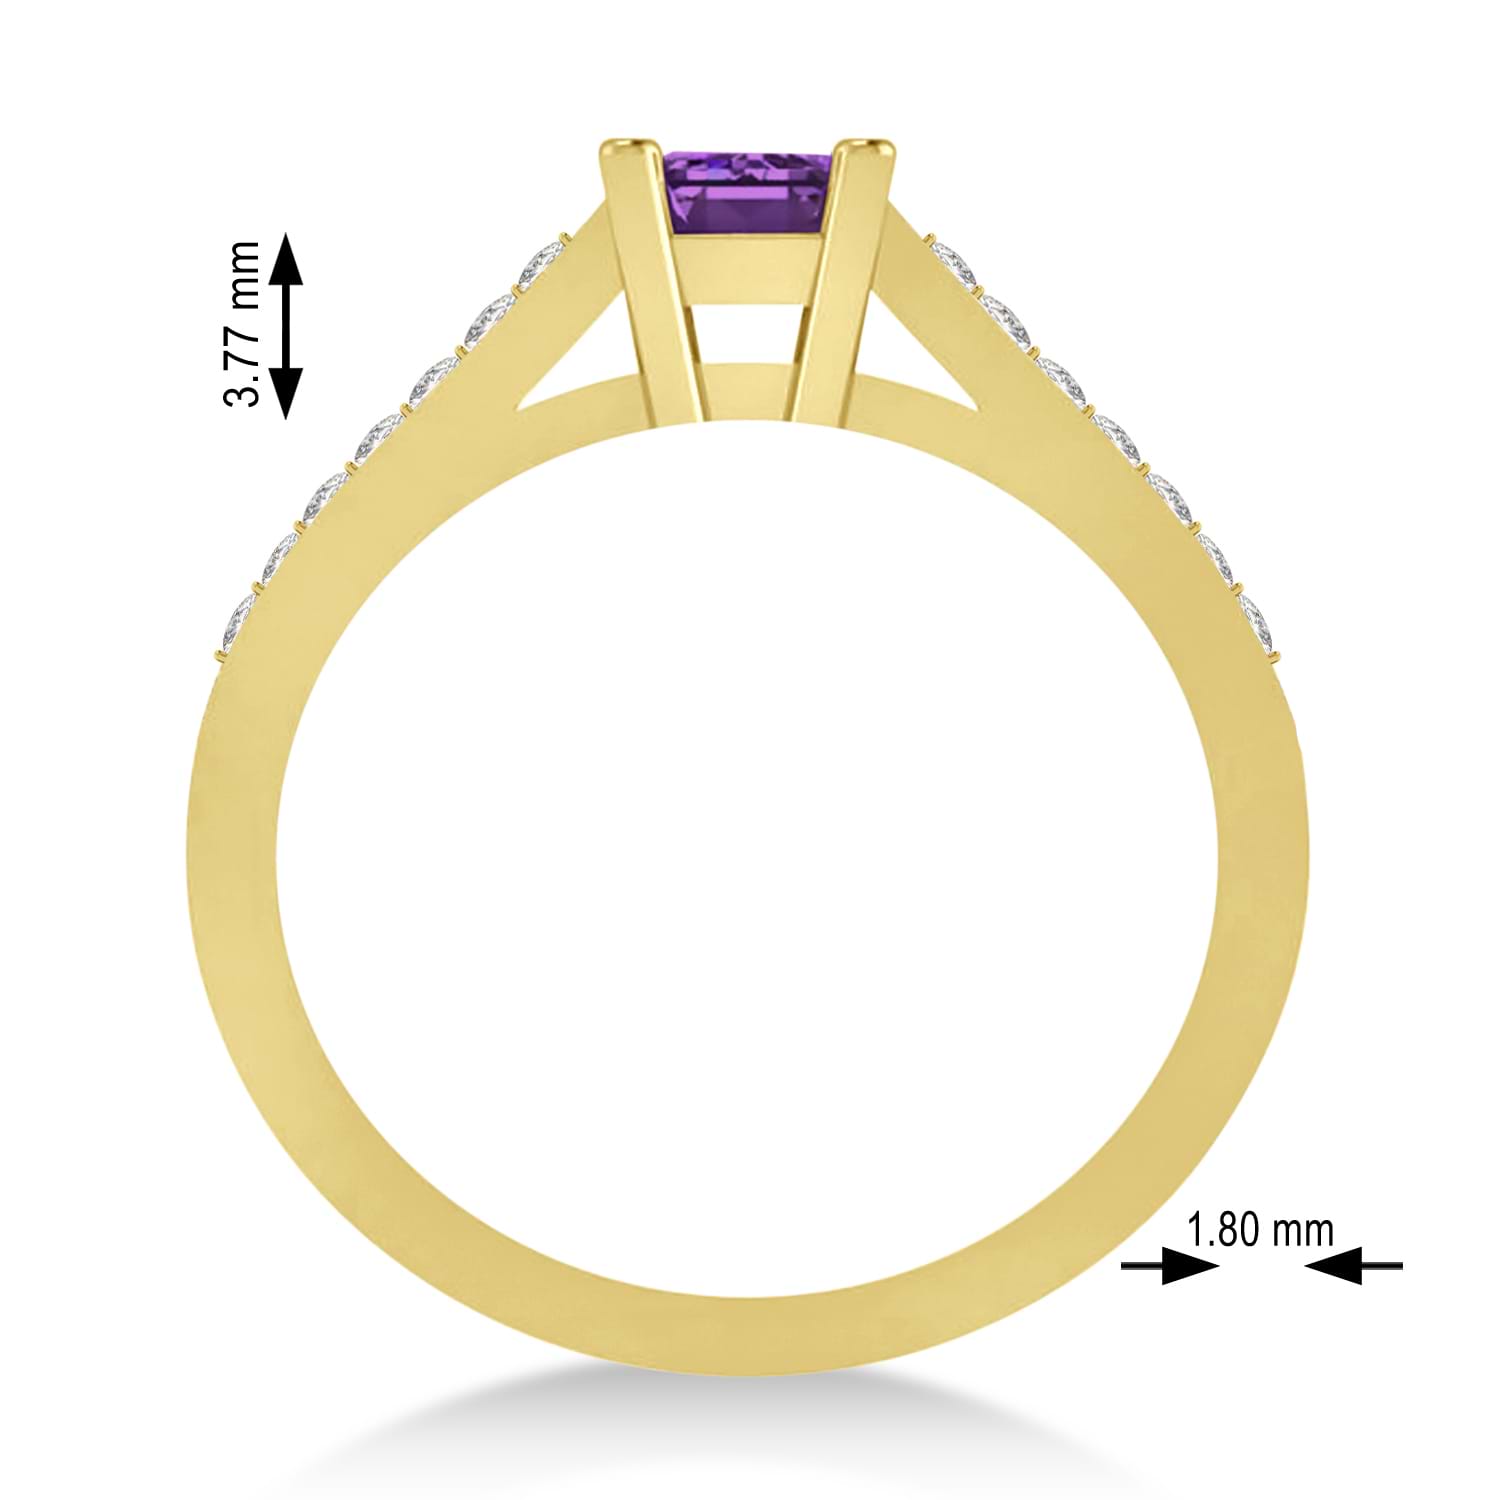 Amethyst & Emerald-Cut Diamond Pre-Set Engagement Ring 14k Yellow Gold (1.09ct)